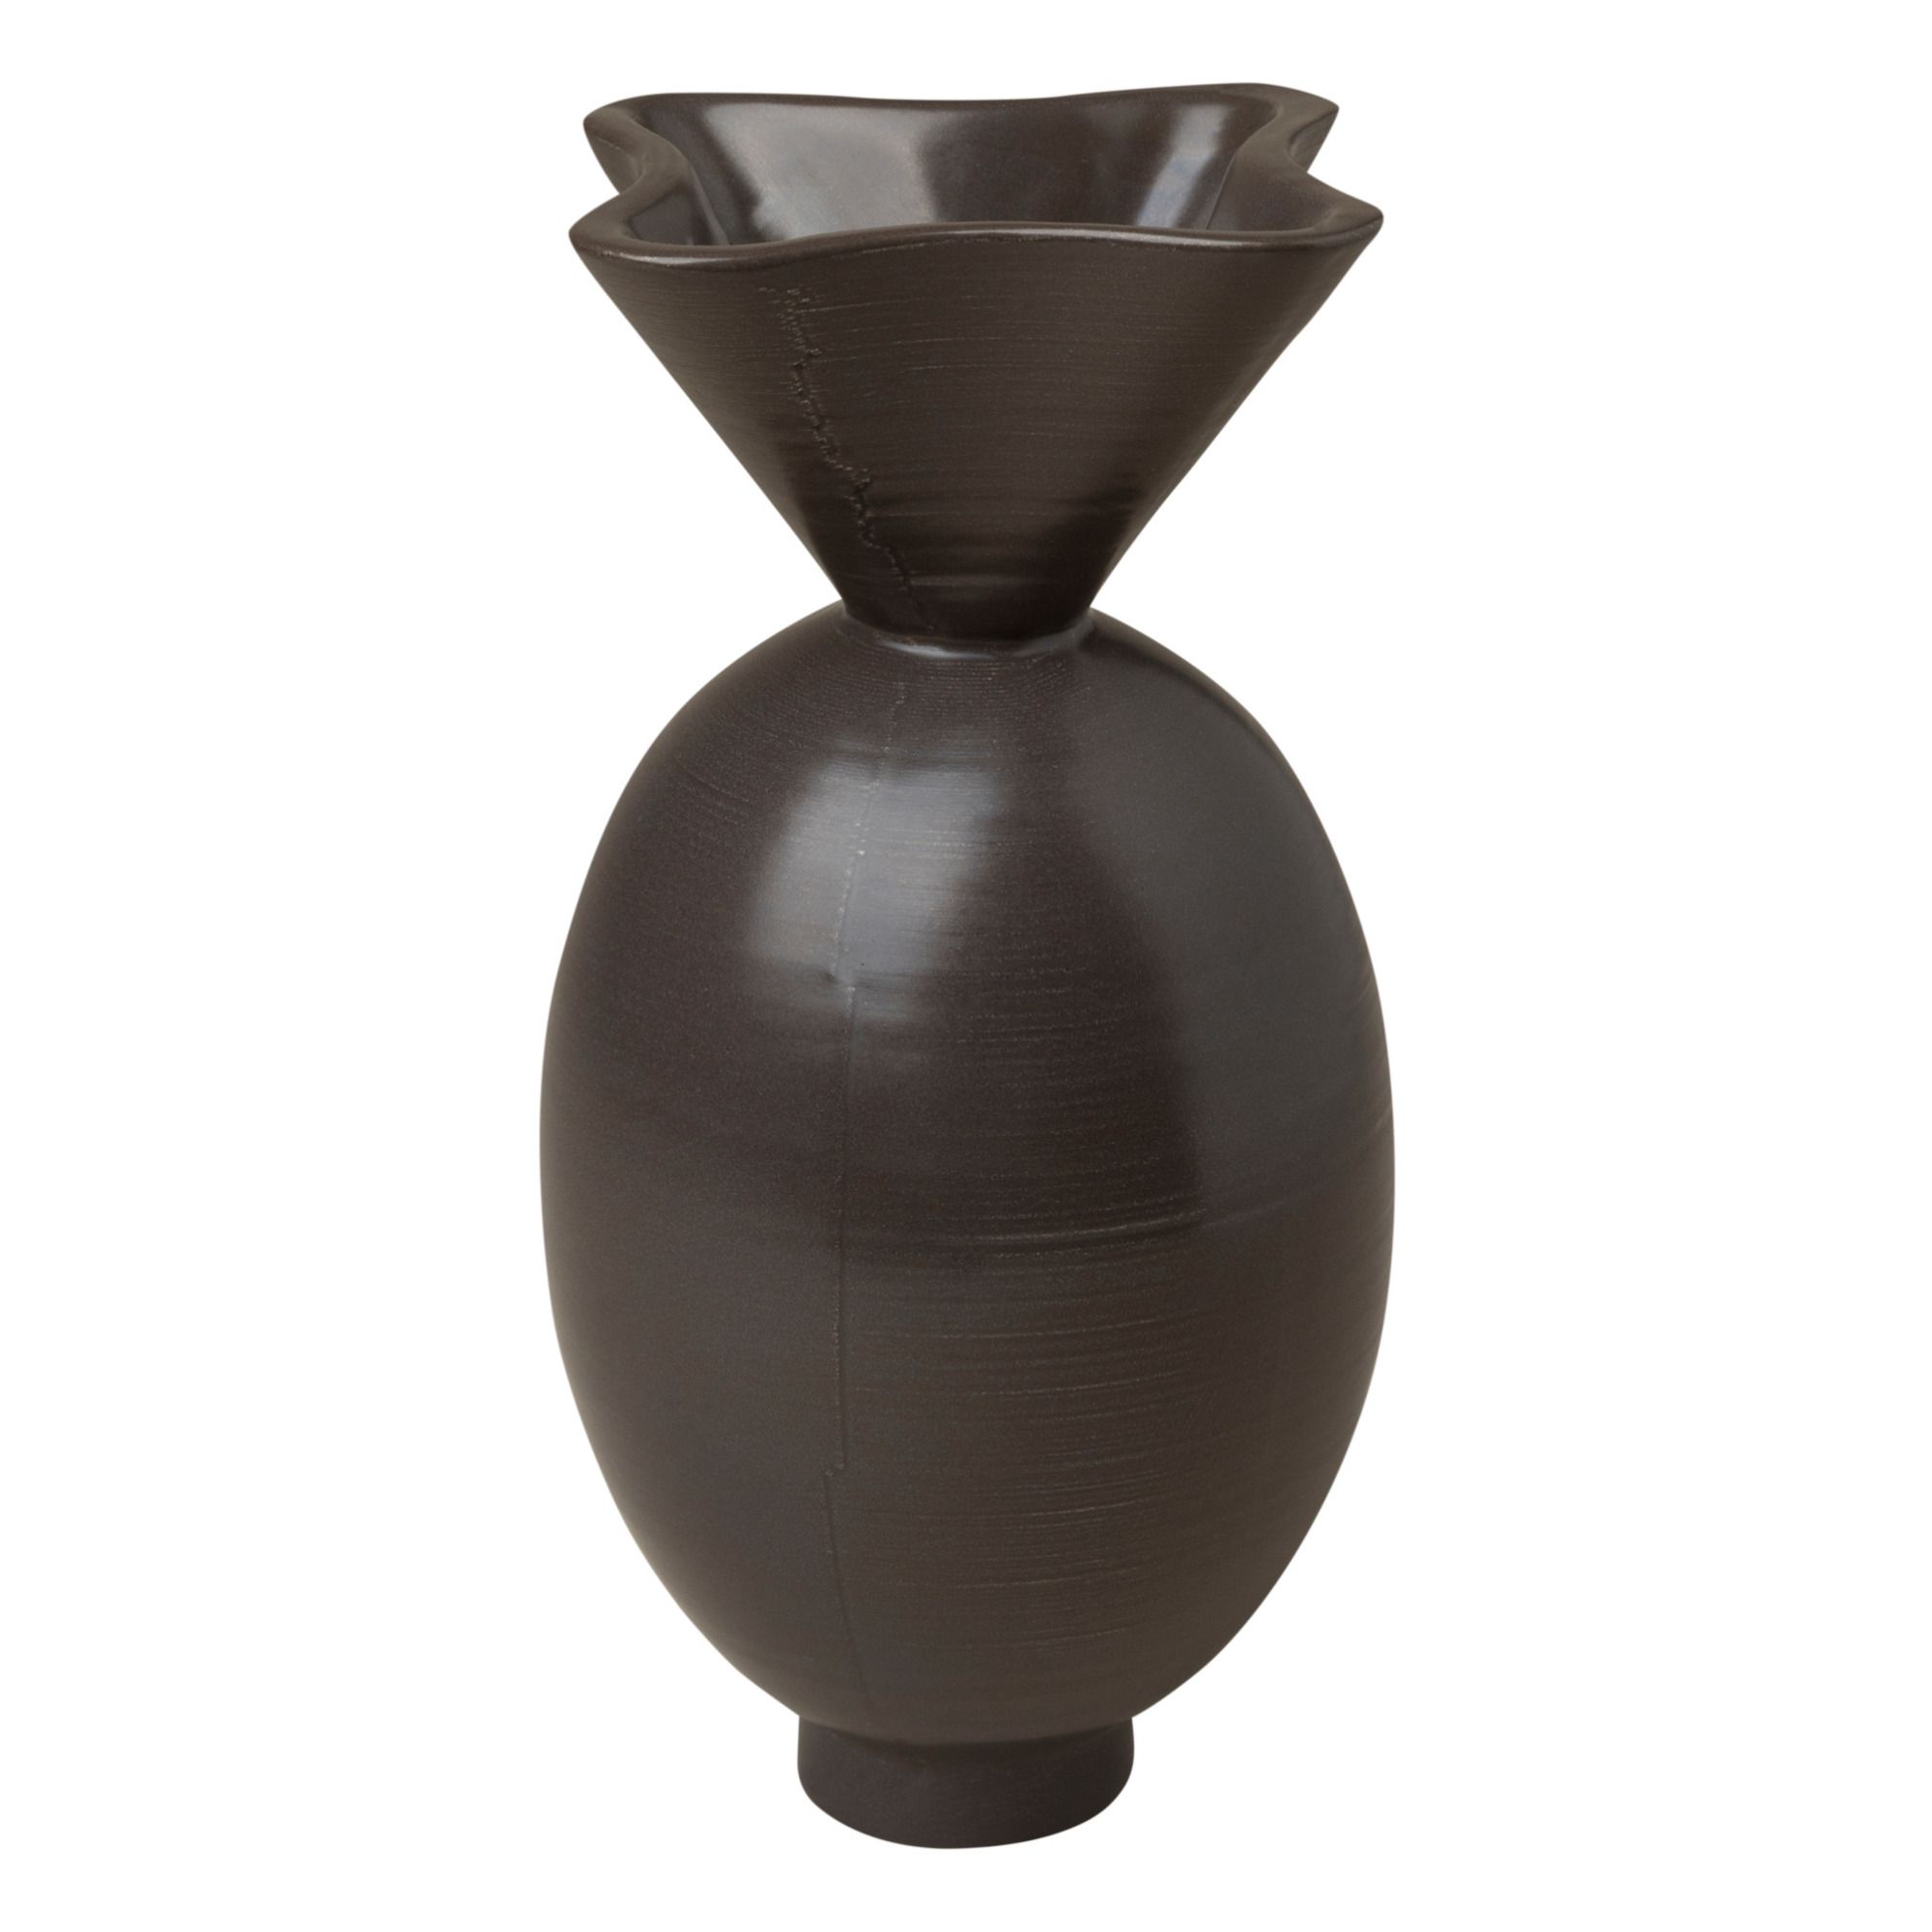 Los Objetos Decorativos - Vase Von en argile émaillé - Noir